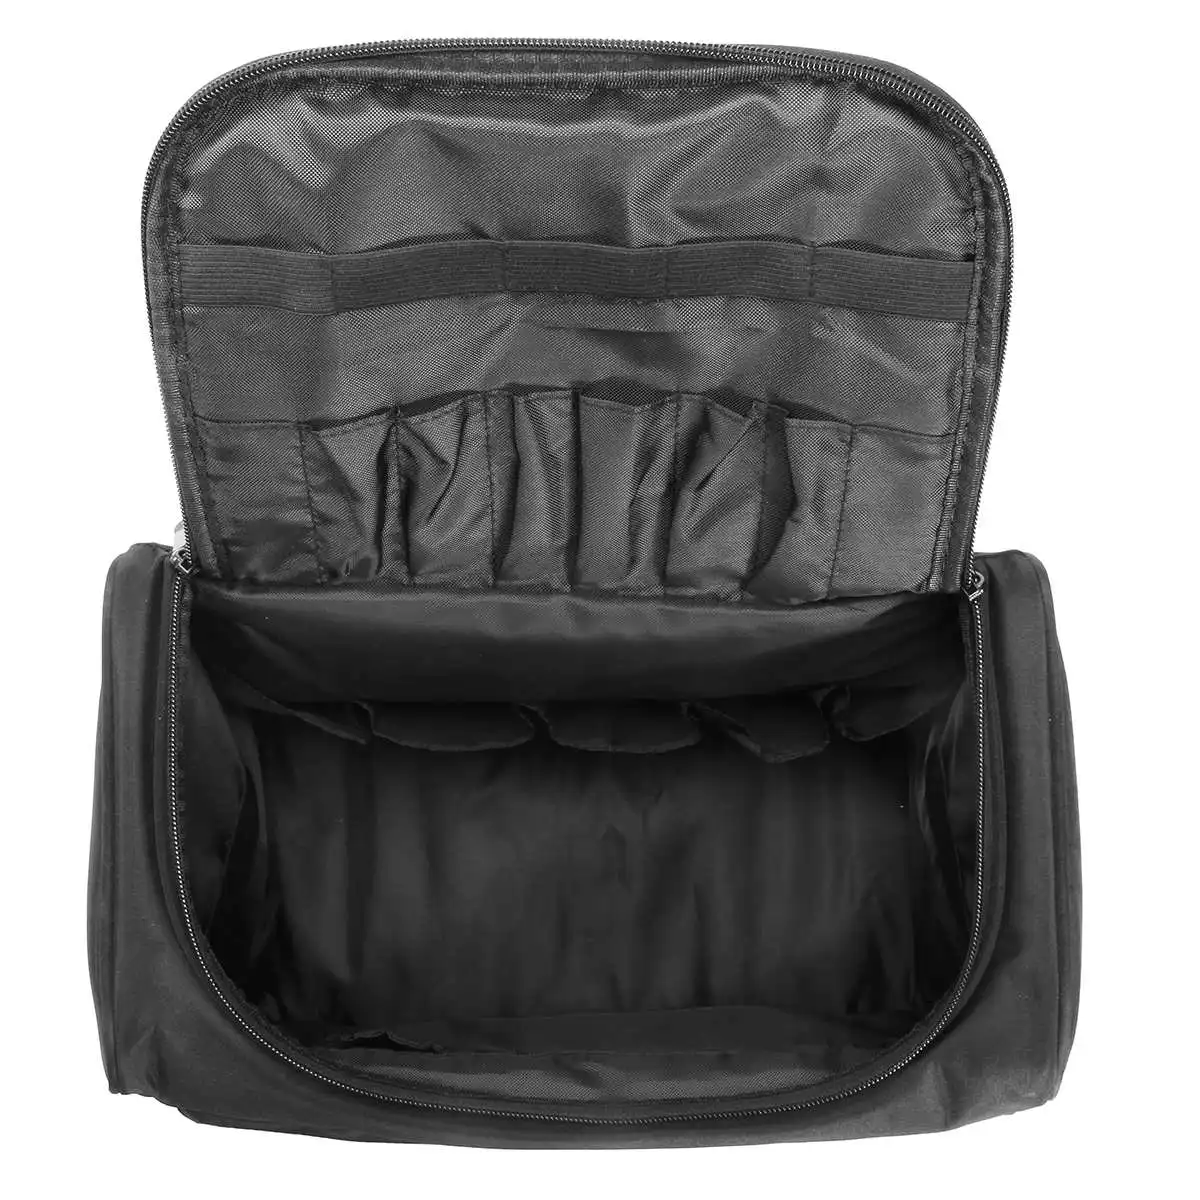 Kotak Organizer profesional tas Clapboard multilapis kualitas tinggi tas penyimpanan kapasitas besar koper